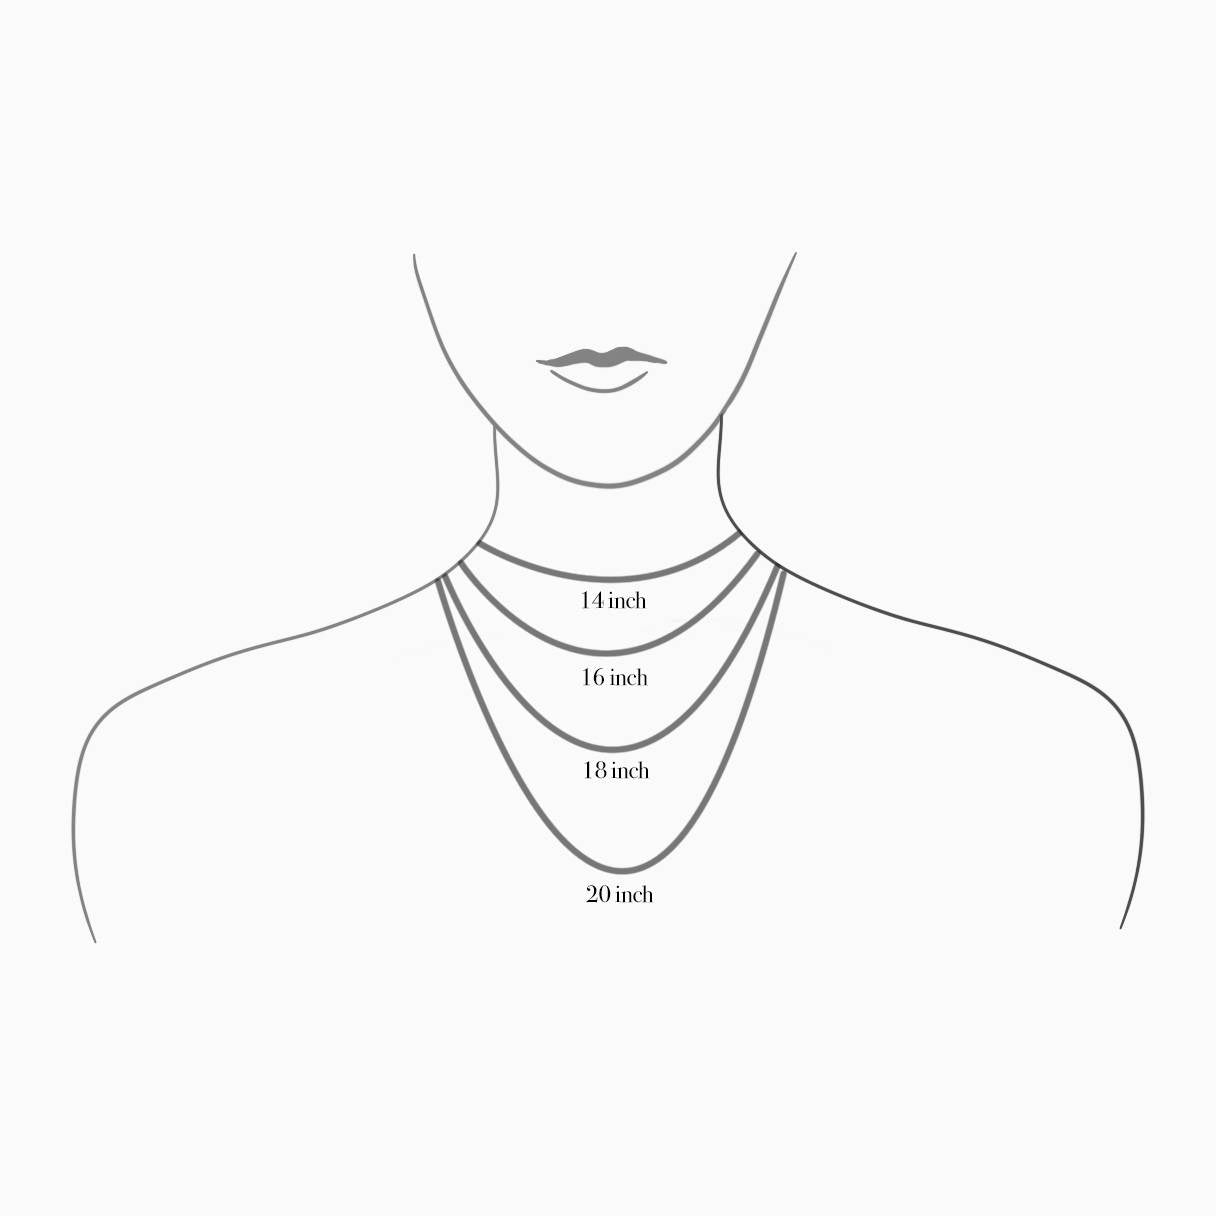 Personalised Name Necklace - Jasmine Font